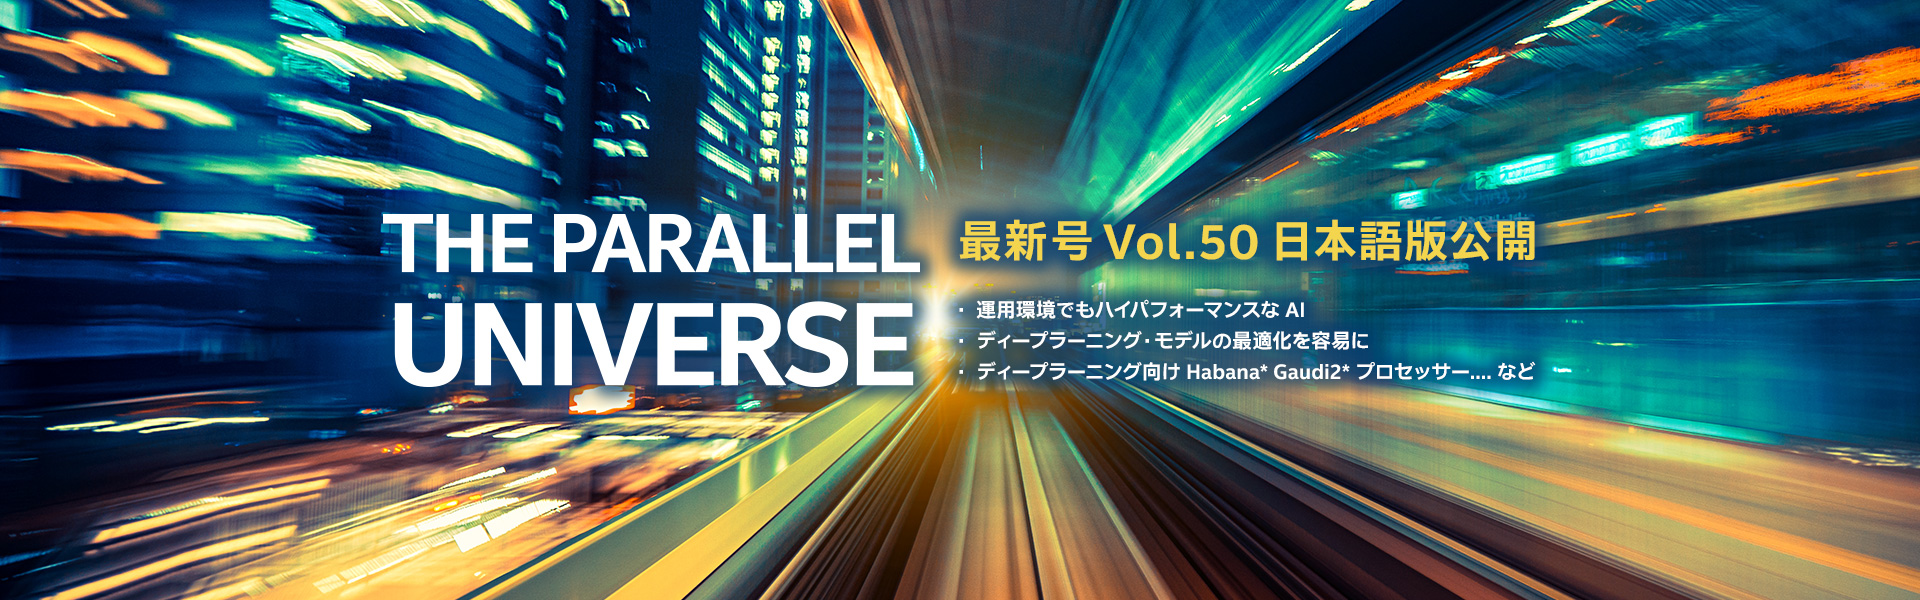 The Parallel Universe 最新号 Vol.50 日本語版公開中